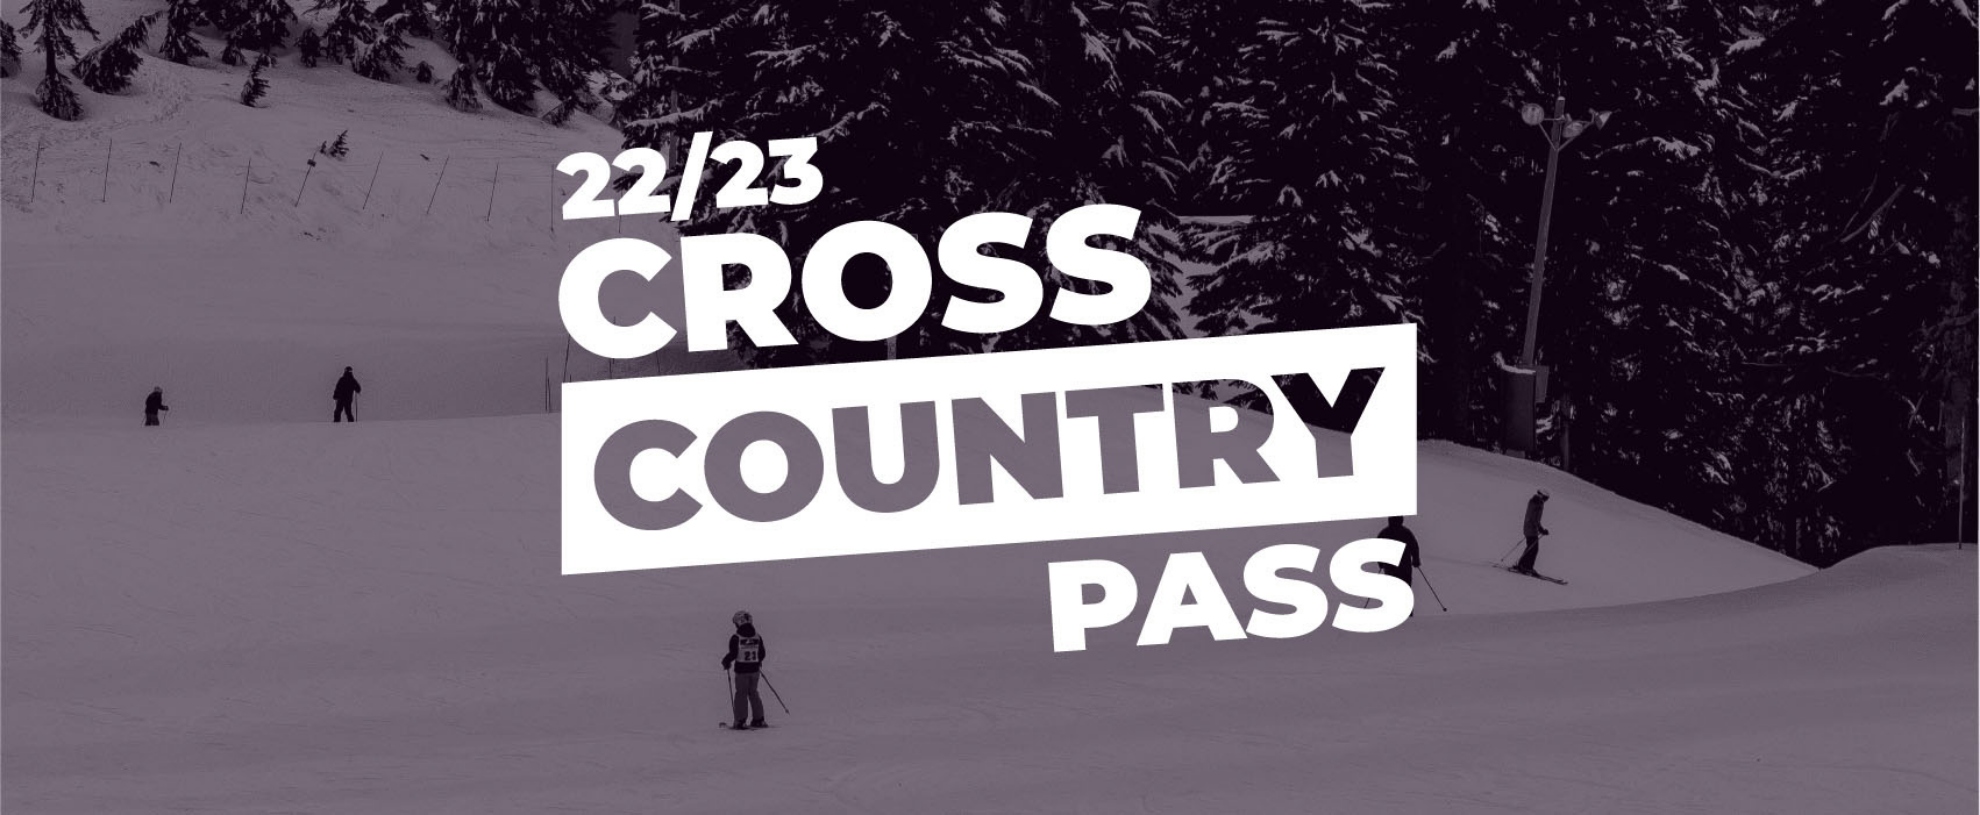 Cross Country Pass